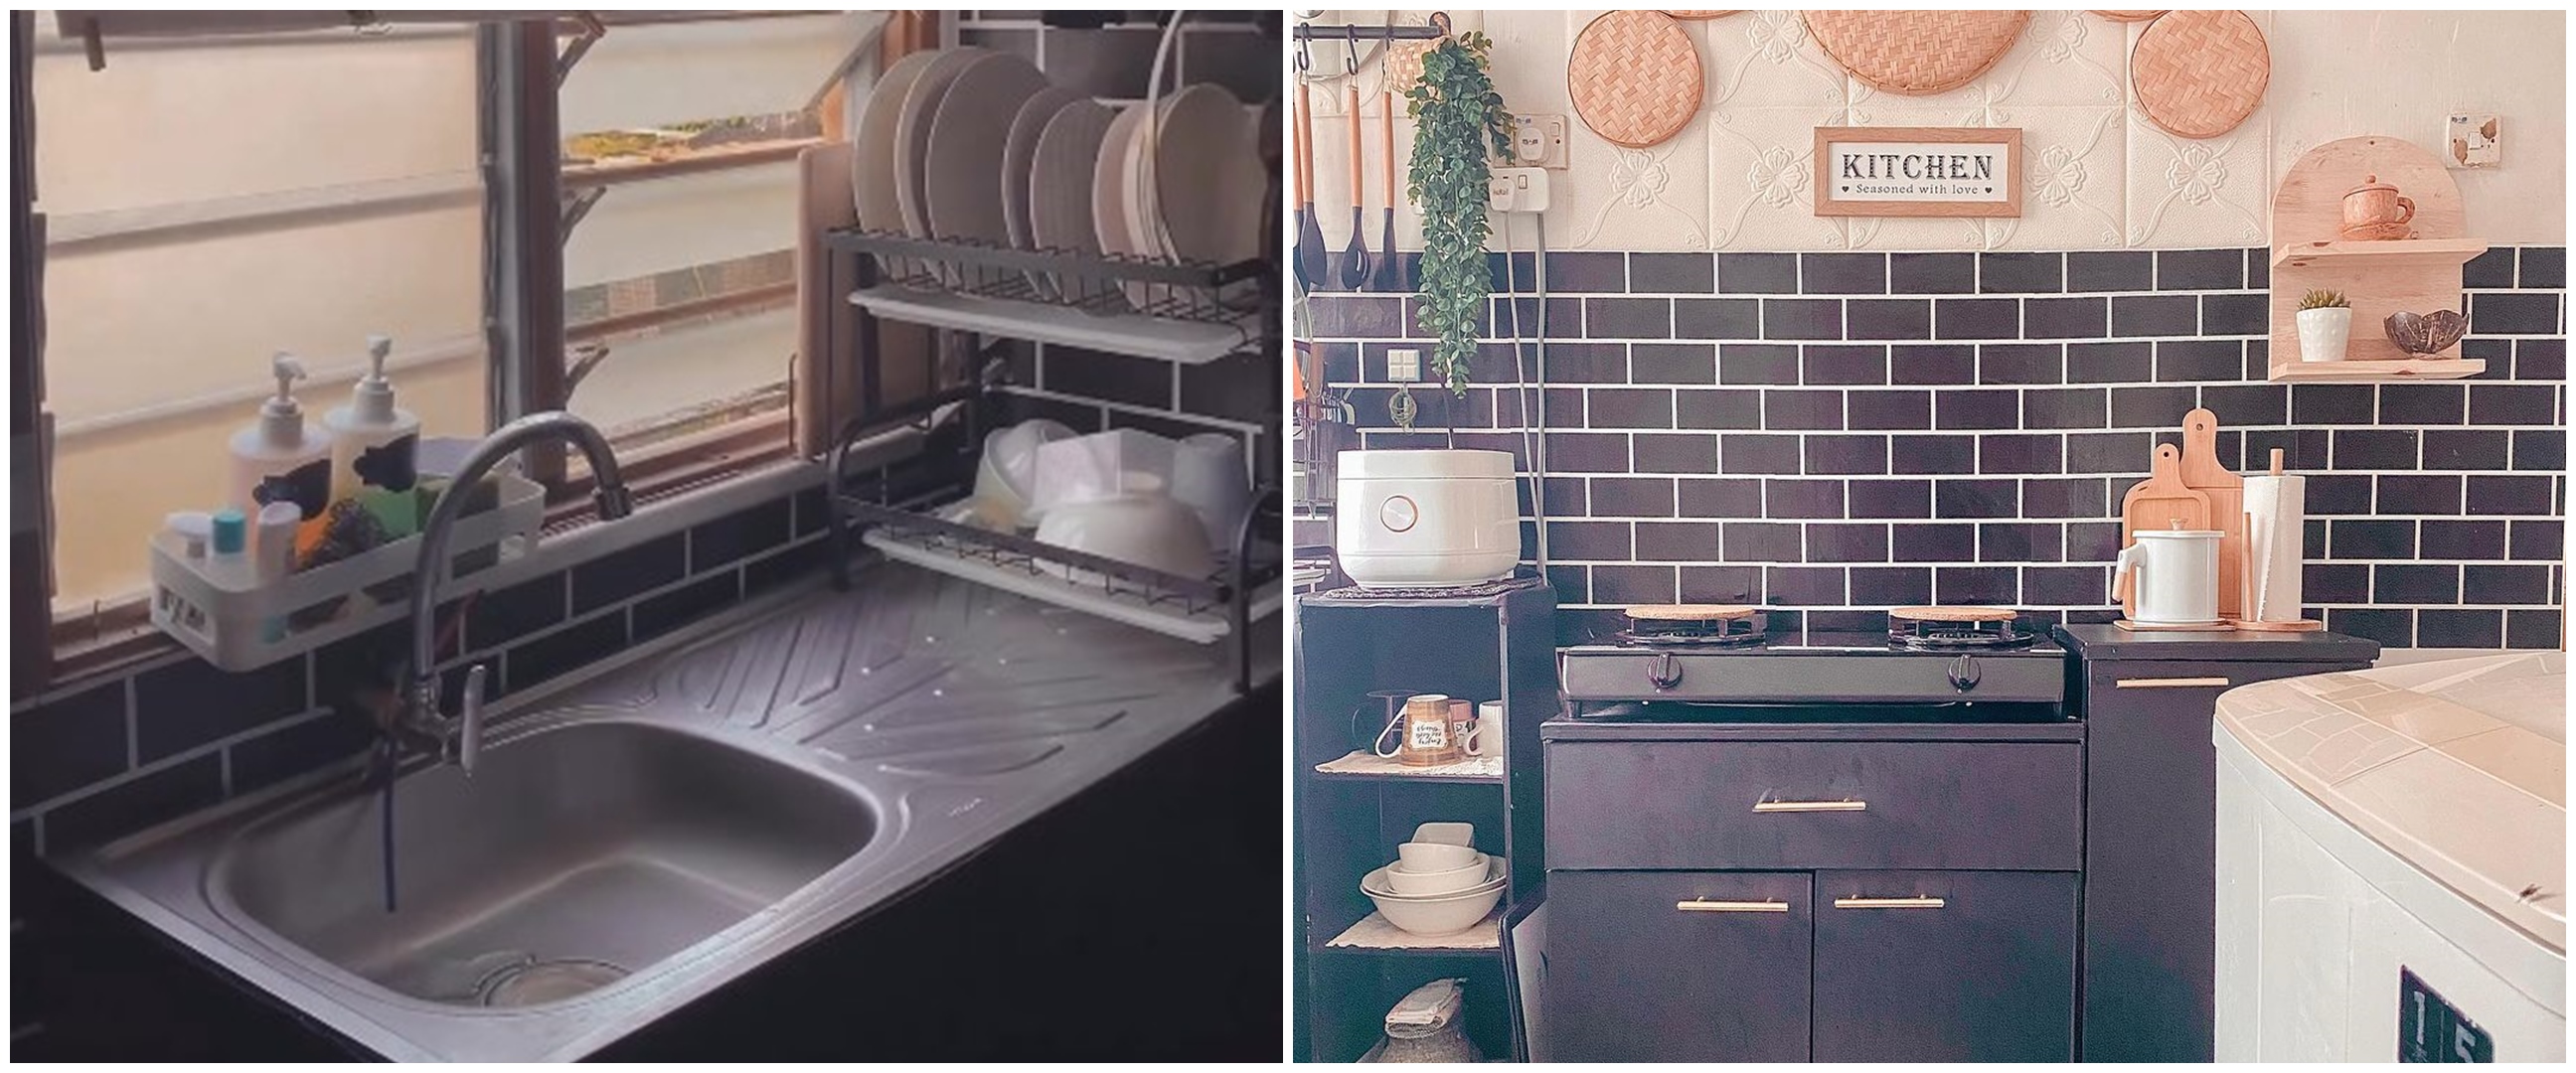 Mewah tanpa kitchen set, 9 potret dapur mungil ini perpaduan warna hitamnya bikin estetik dan elegan